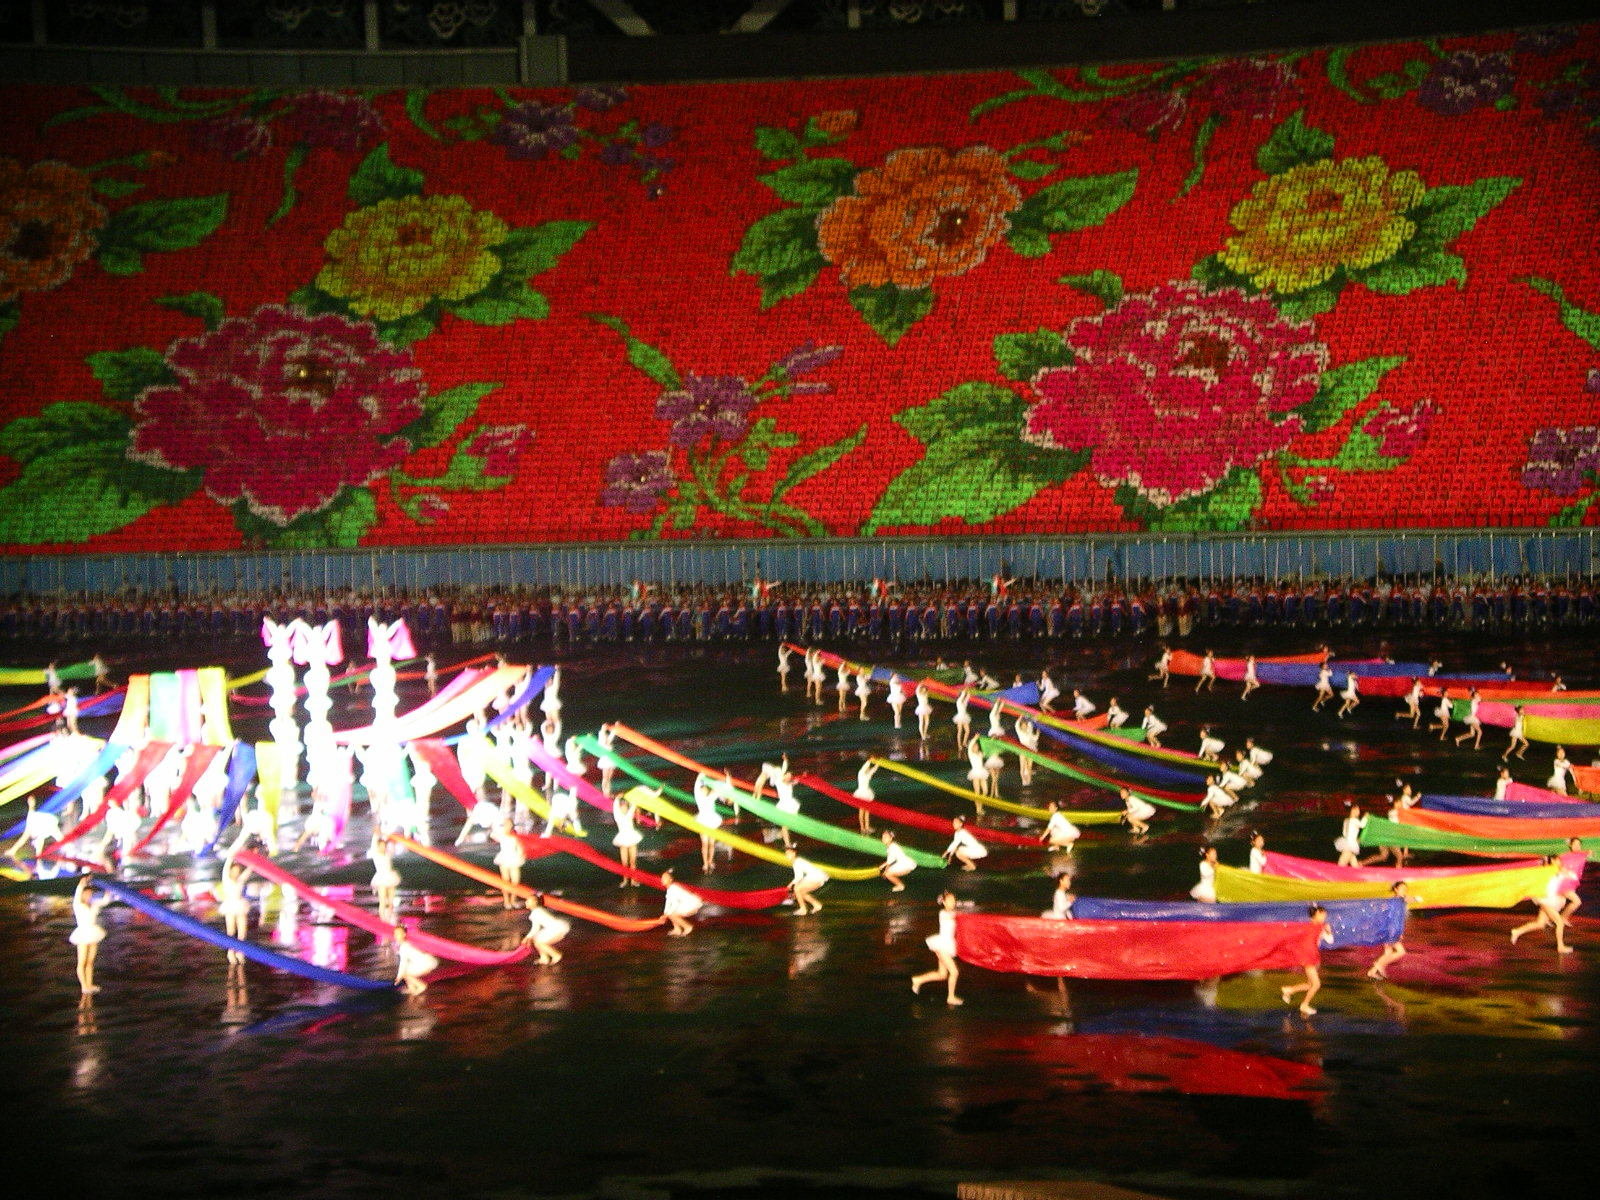 Colorful mass dance performance